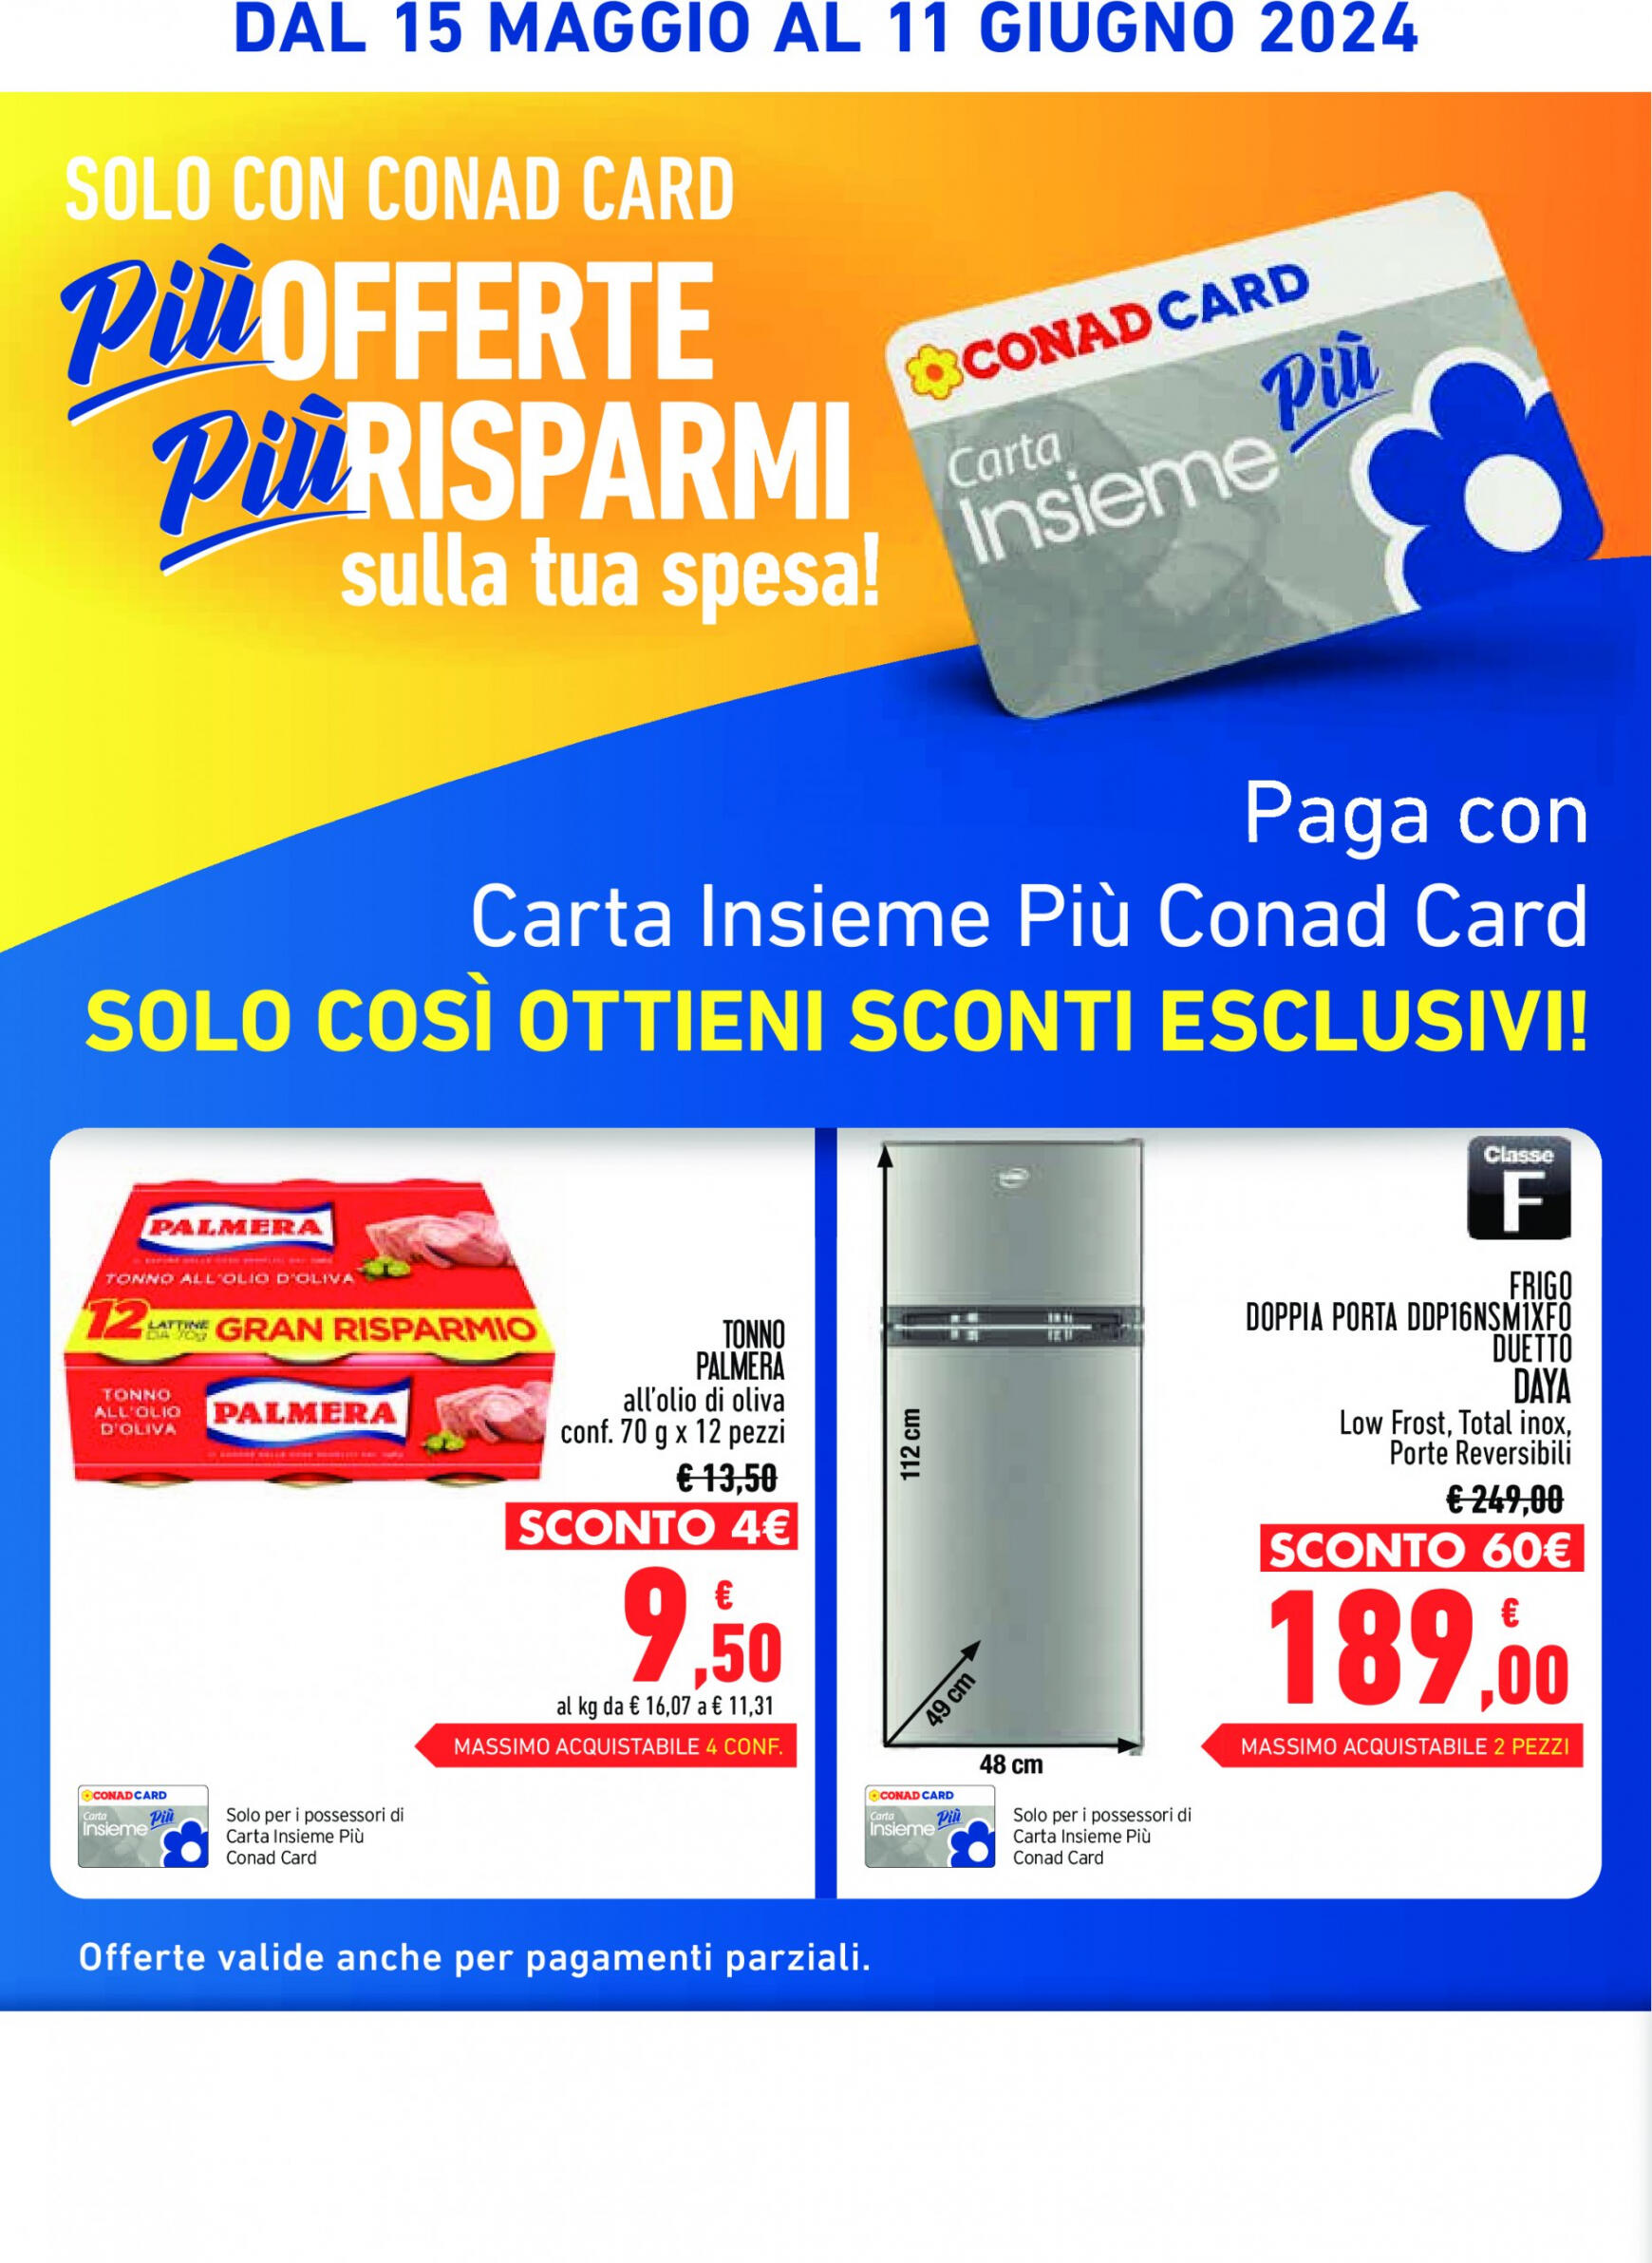 conad - Nuovo volantino Conad 15.05. - 11.06. - page: 2